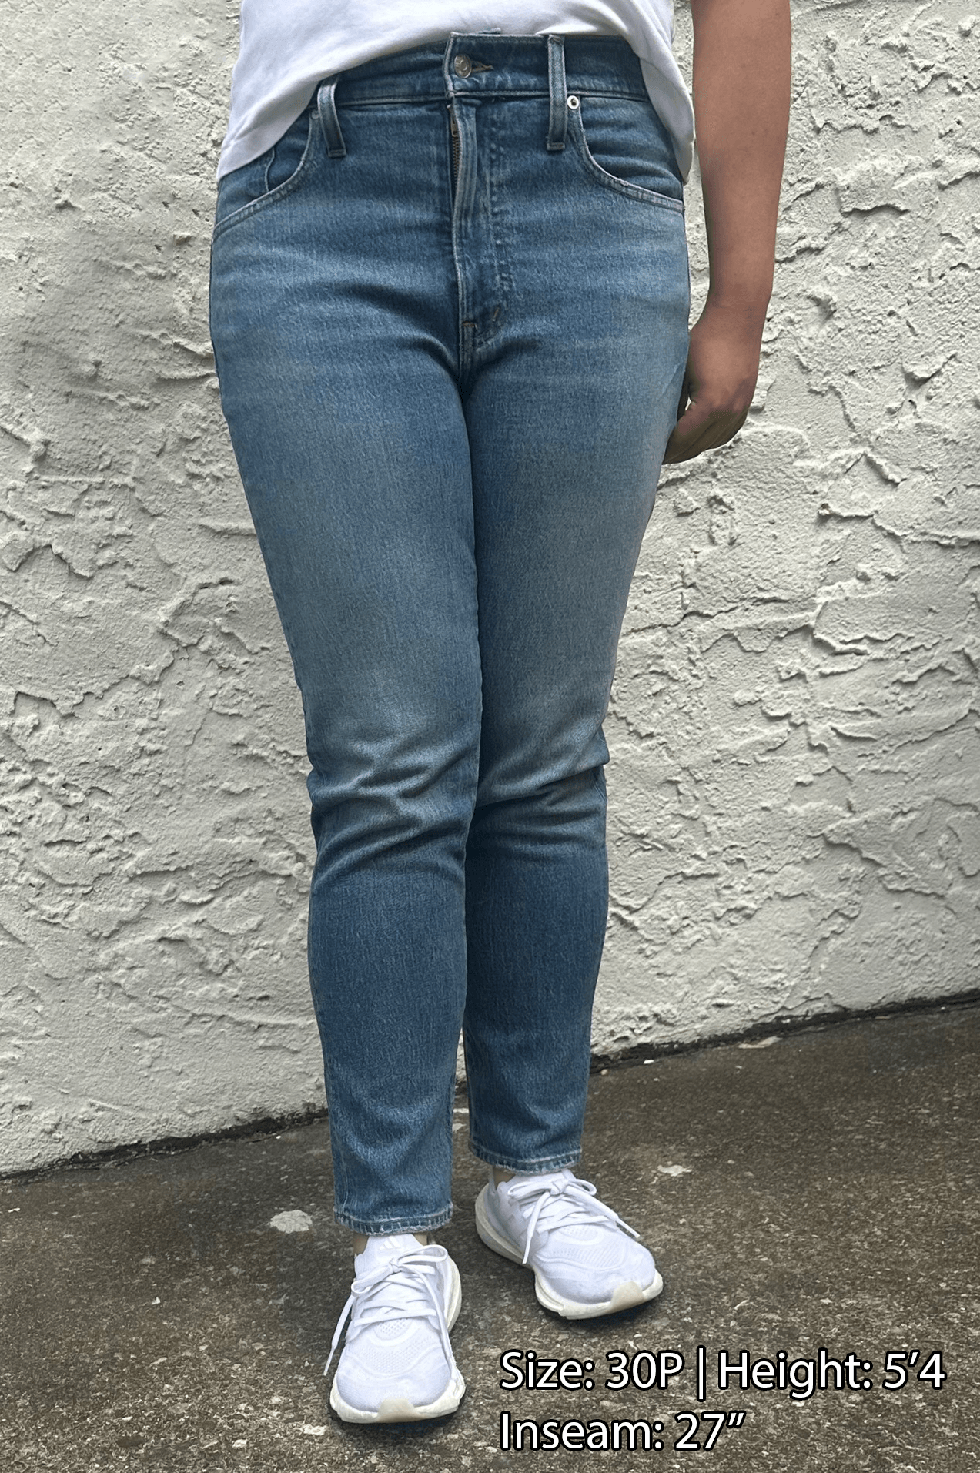 The Petite Perfect Vintage Jean